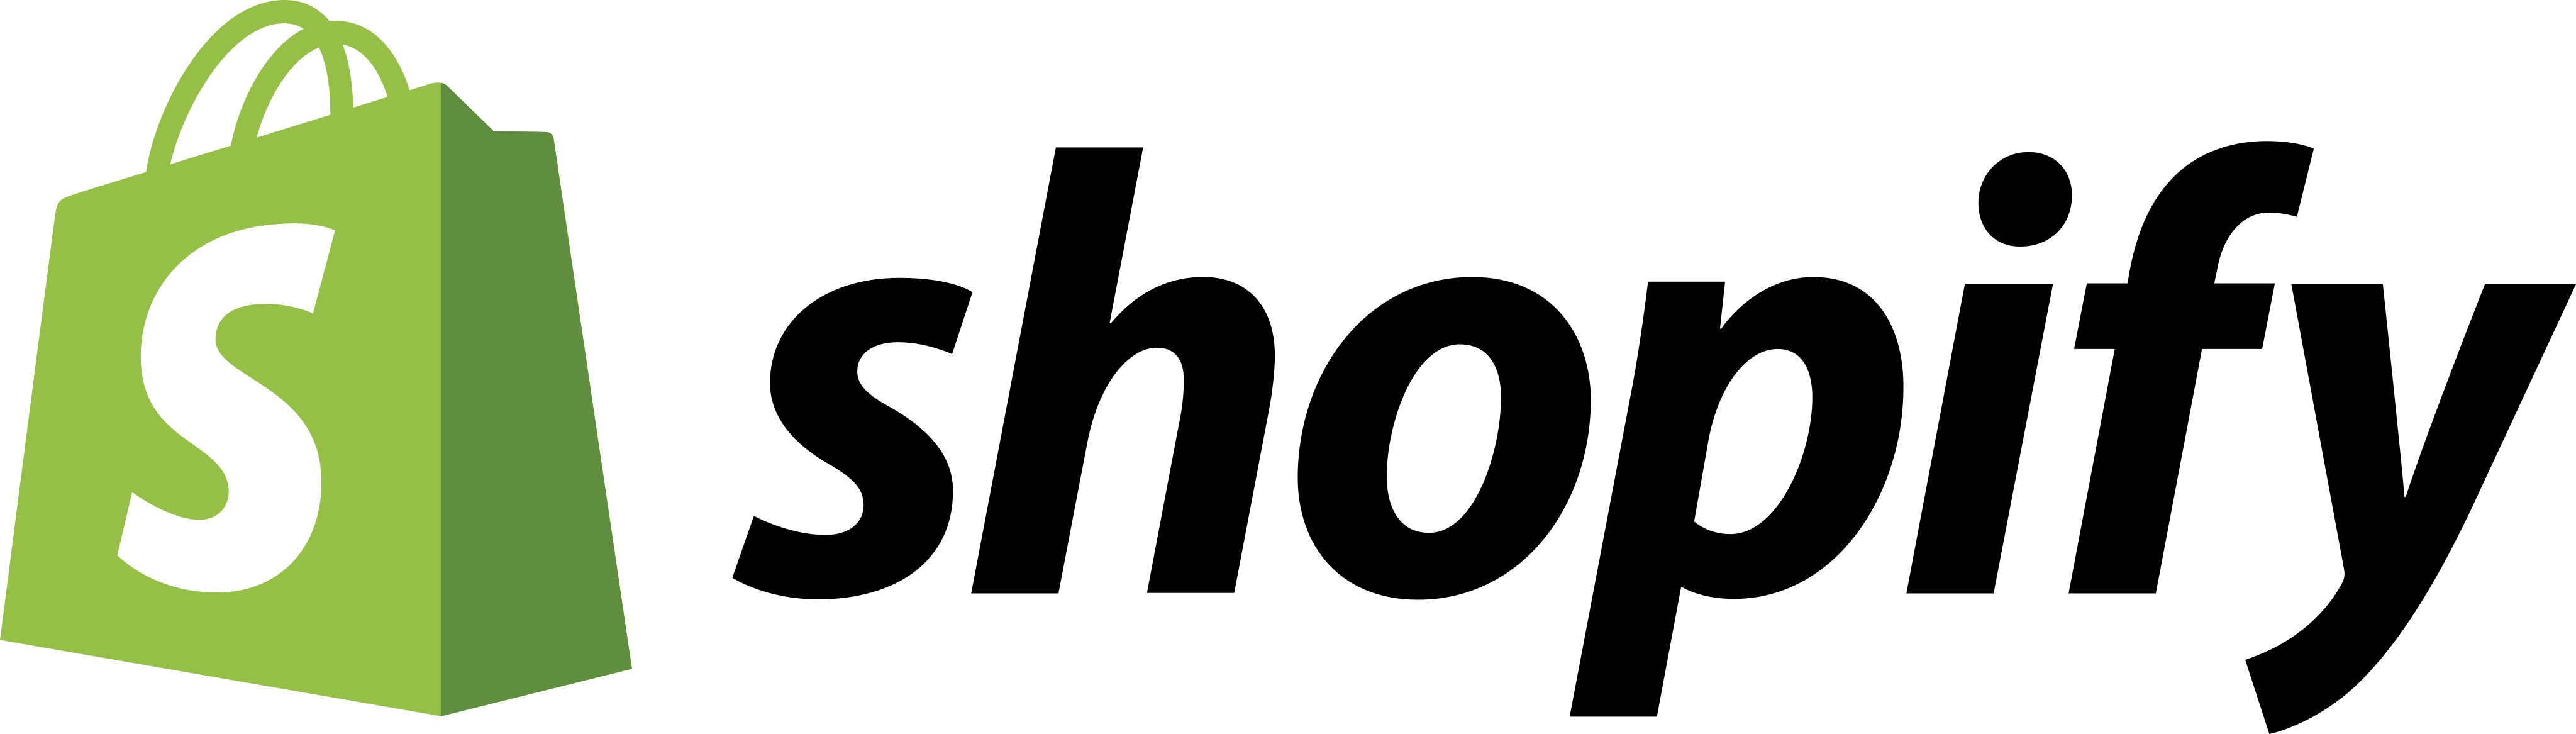 Shopify Logo.